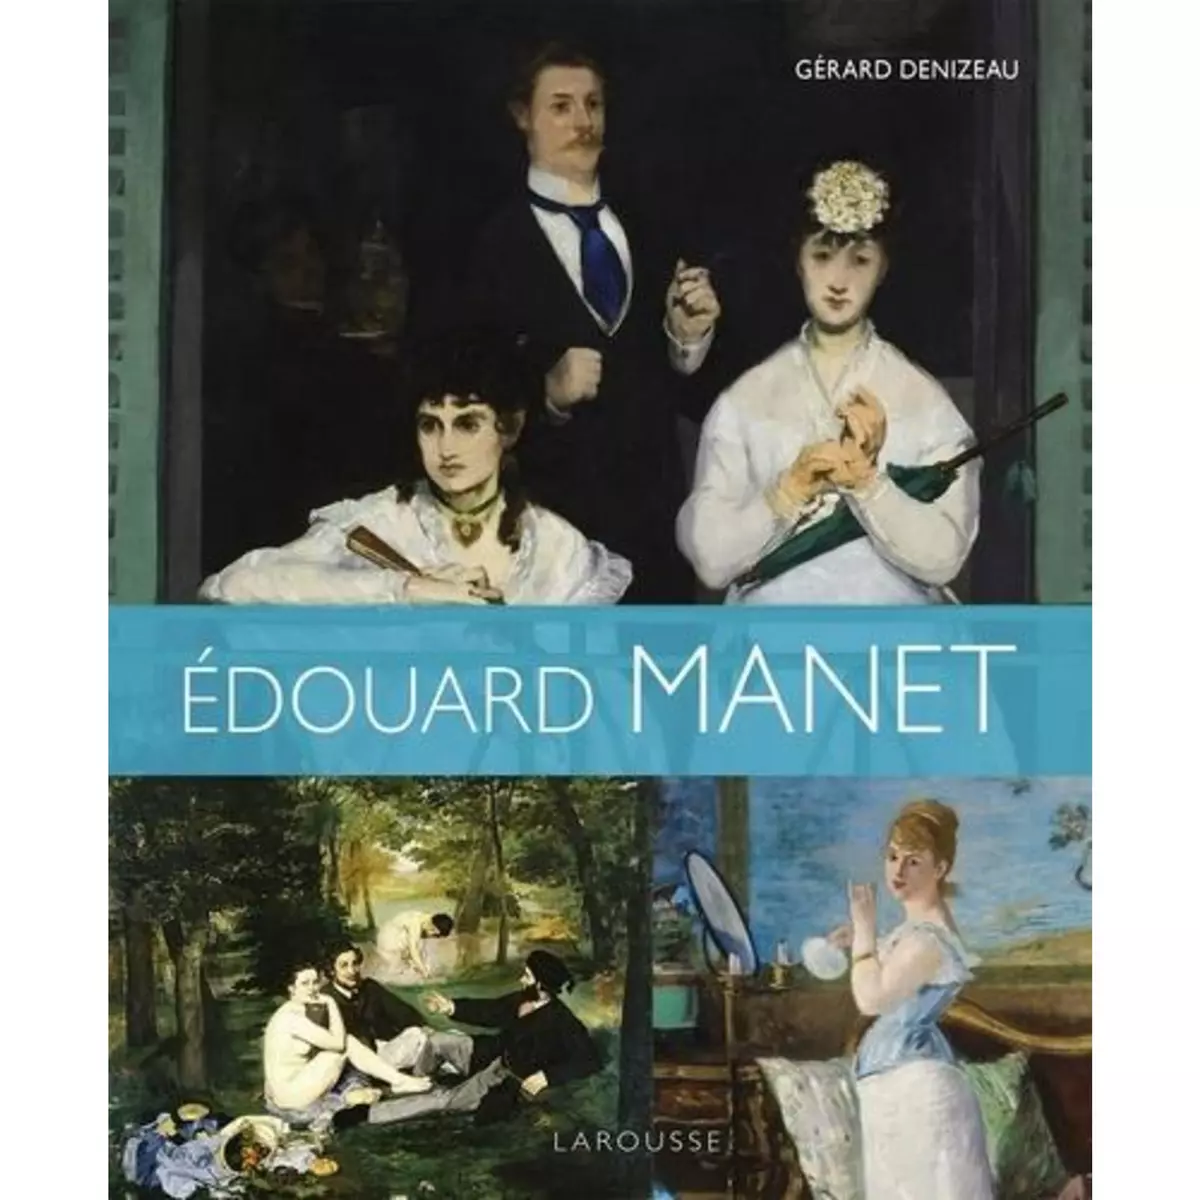  EDOUARD MANET, Denizeau Gérard